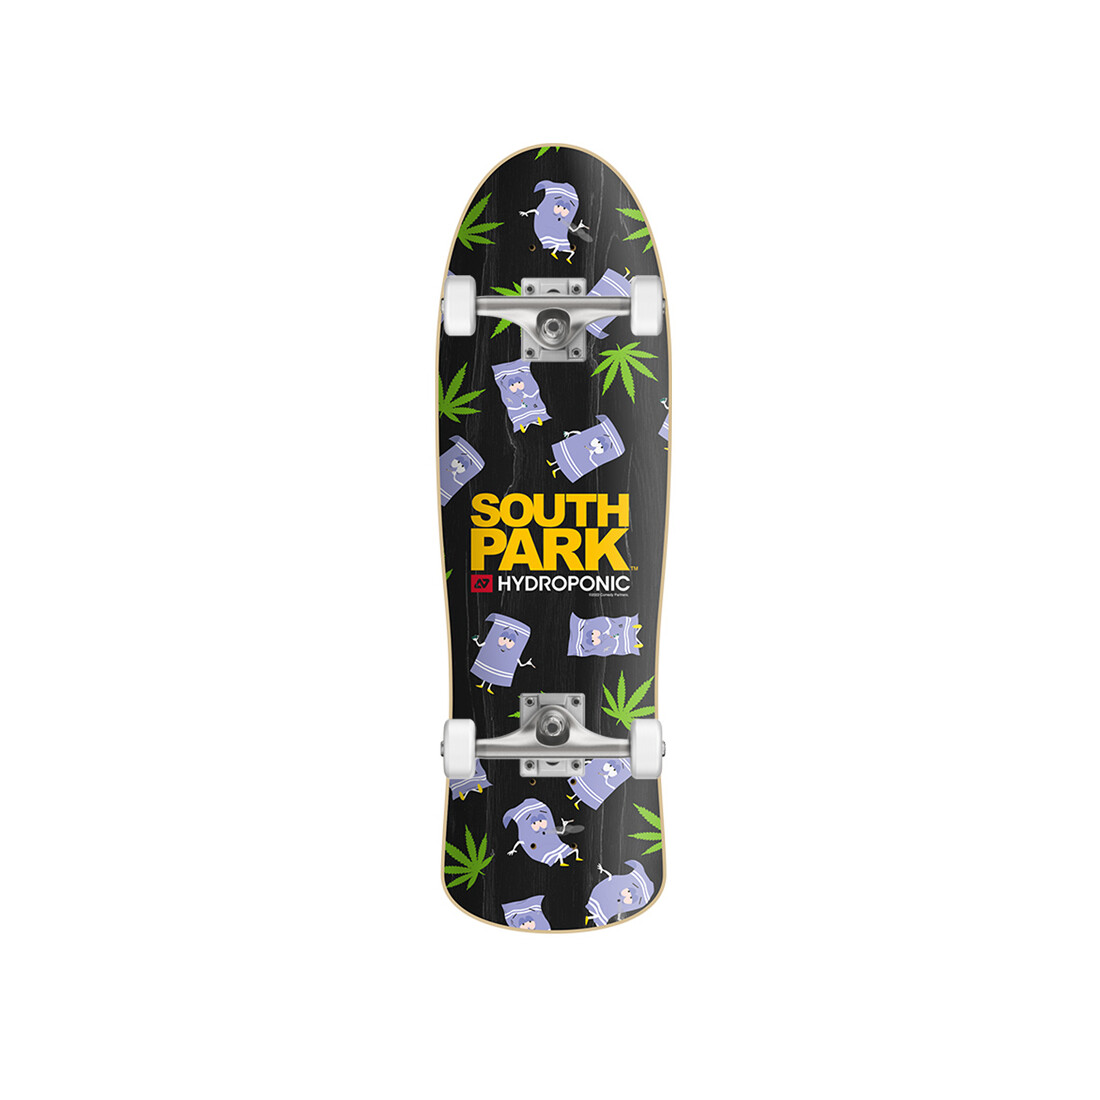 Hydroponic x South Park Vandoren Co Towlie pool shape  8.75" compleet skateboard